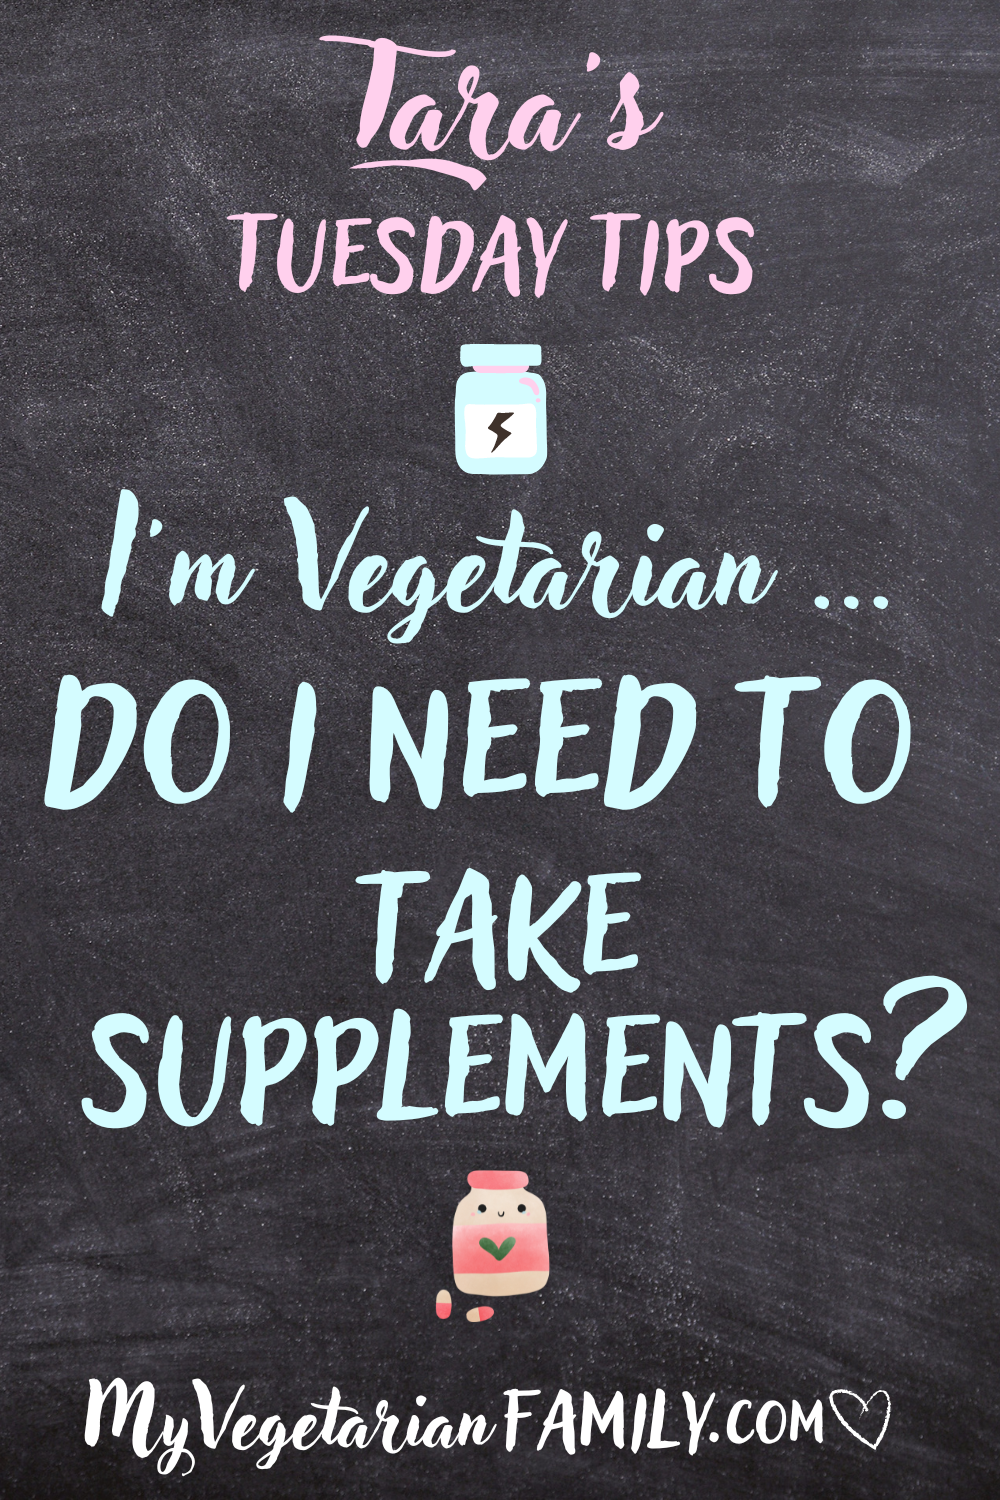 Do I Need Supplements As A Vegetarian? | Tara's Tuesday Tips | My Vegetarian Family #nutritiontips #myvegetarianfamily #tarastuesdaytips